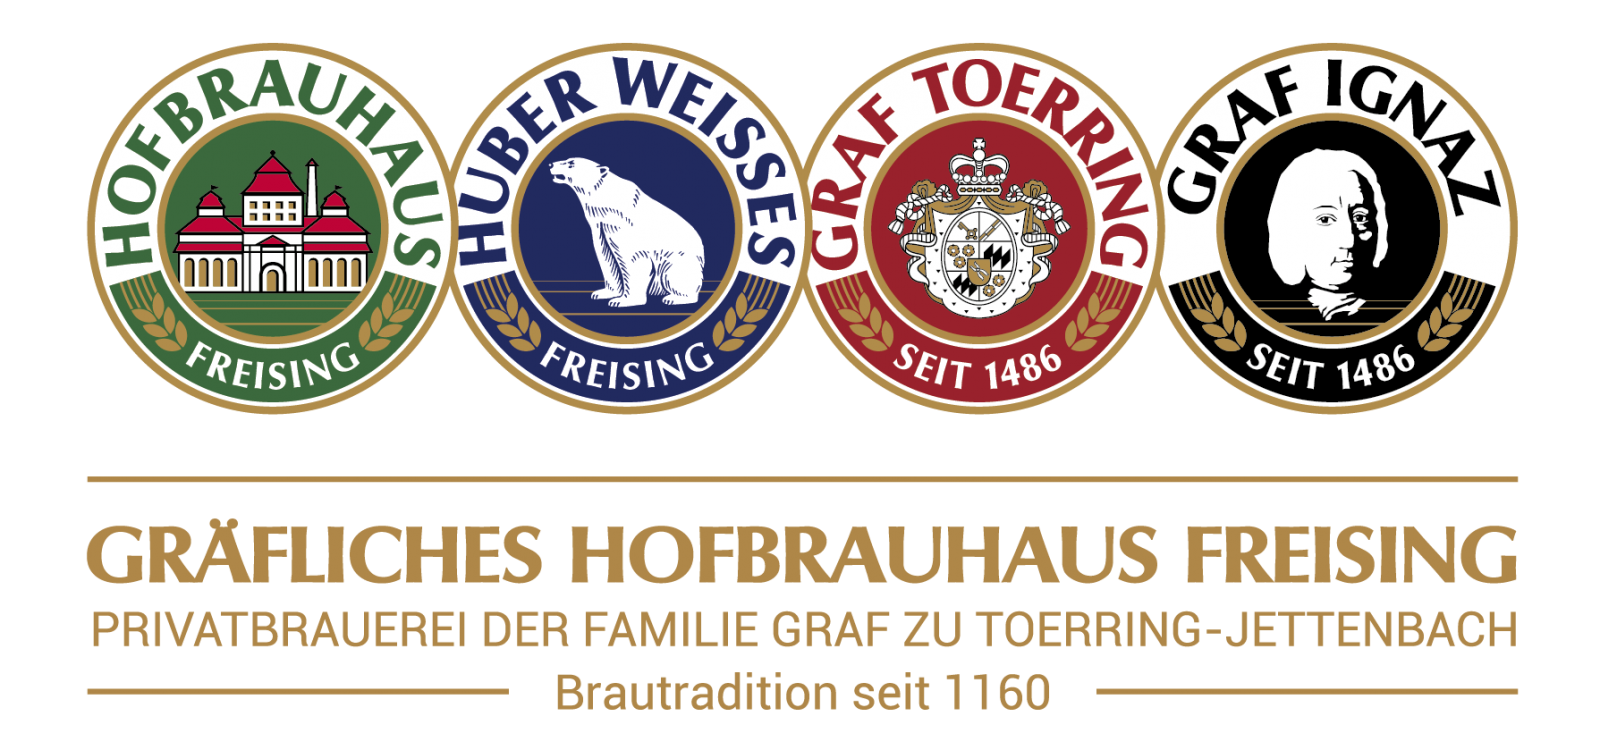 Gräfliches Hofbrauhaus Freising GmbH Logo/Marchio